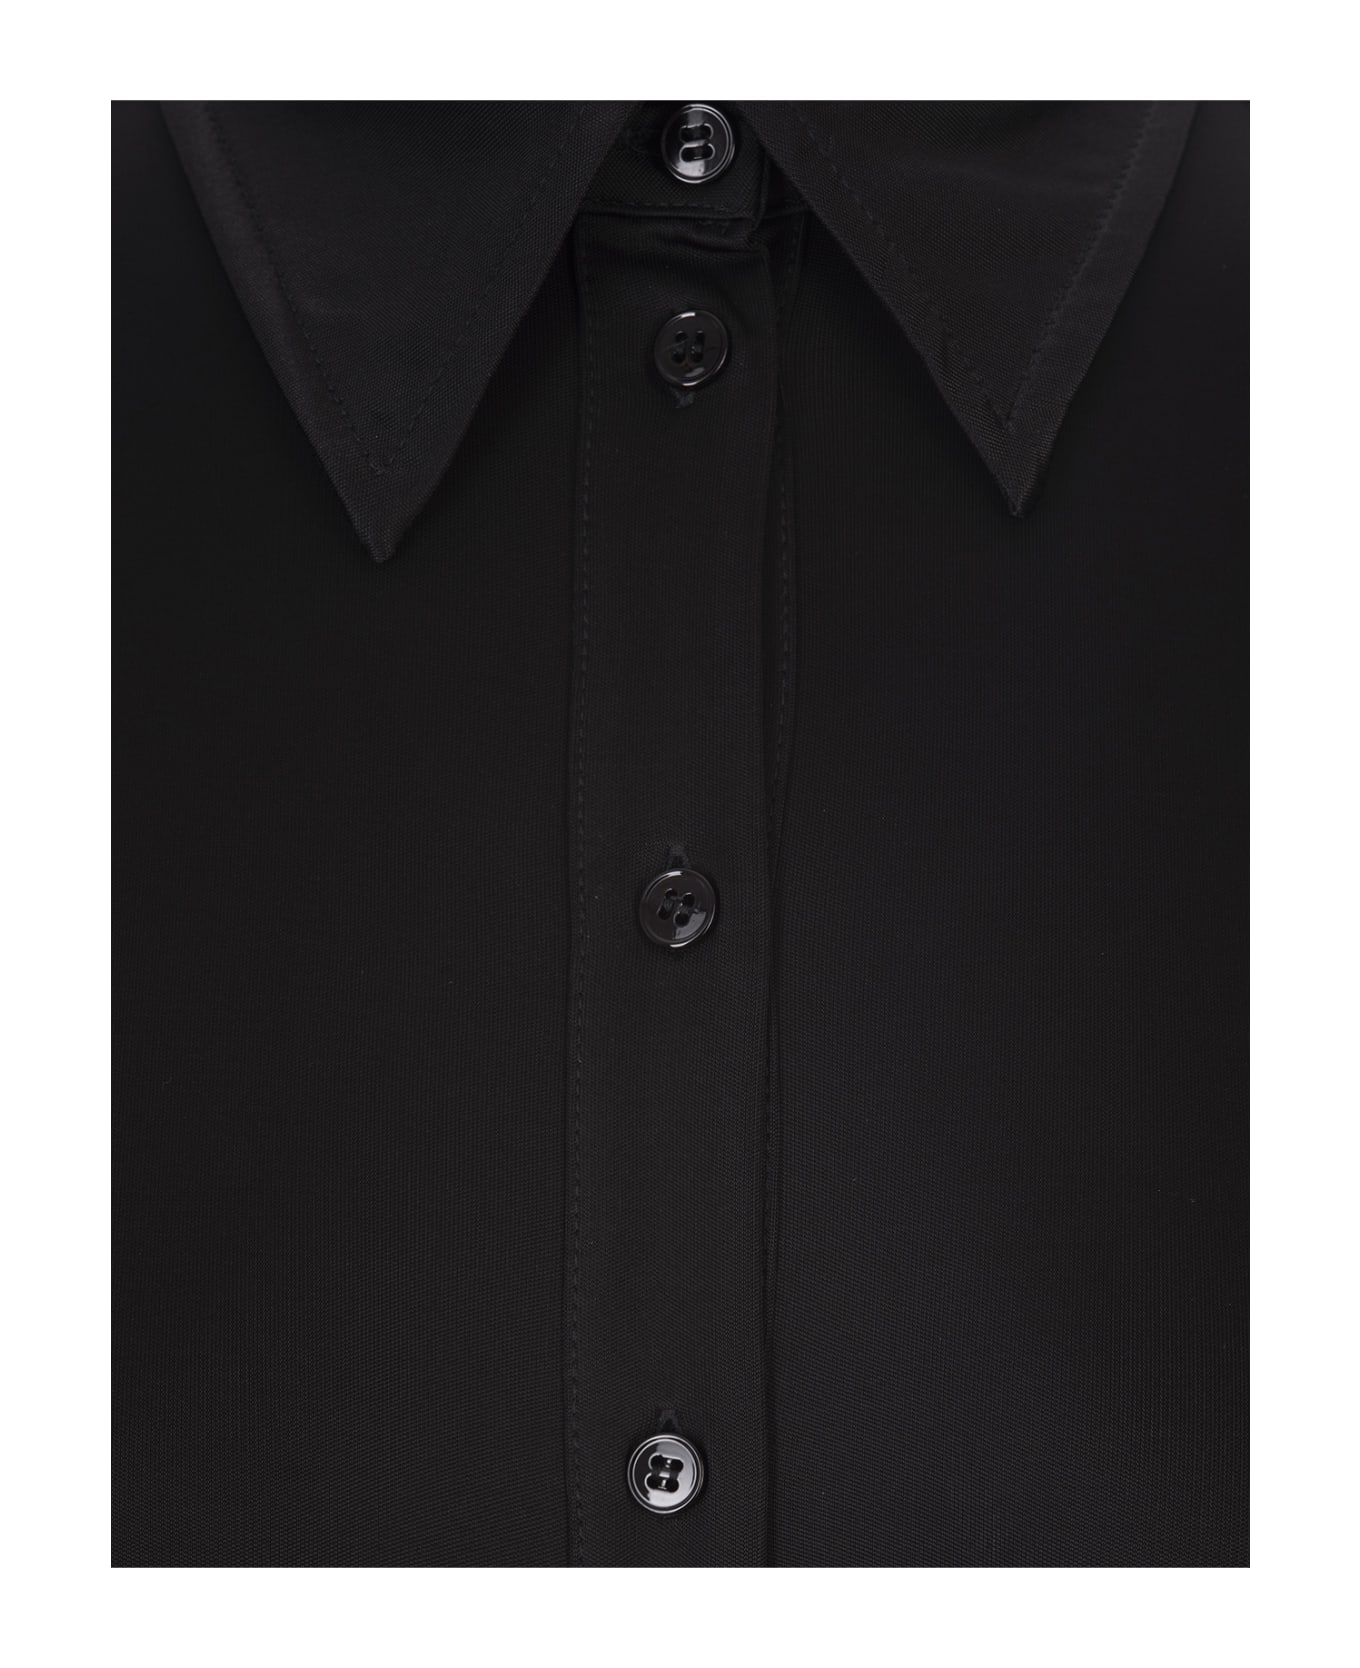 SportMax Black Pera Shirt Body - Black シャツ